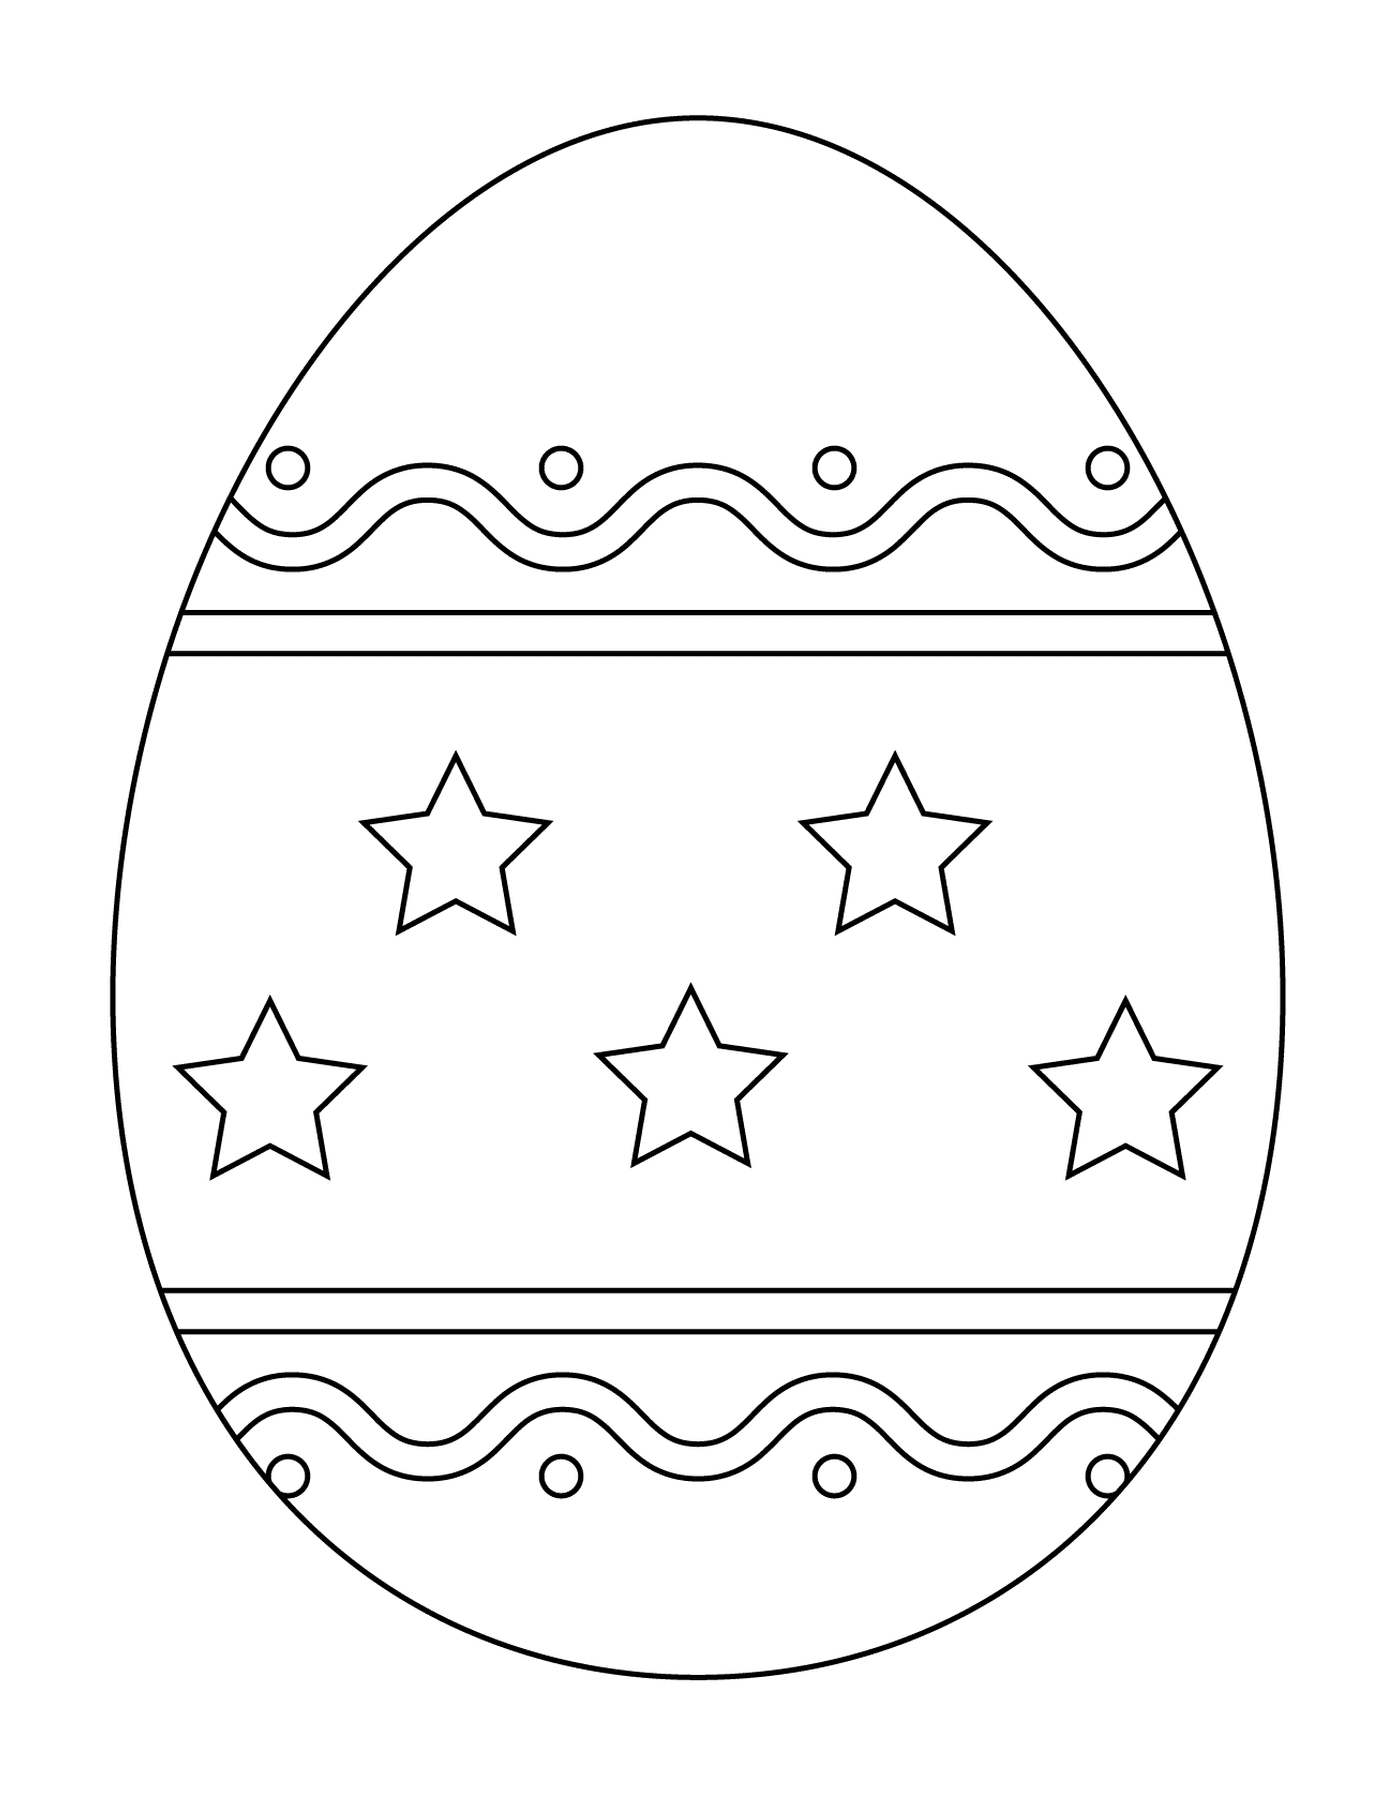  Huevo de Pascua con un patrón sencillo 